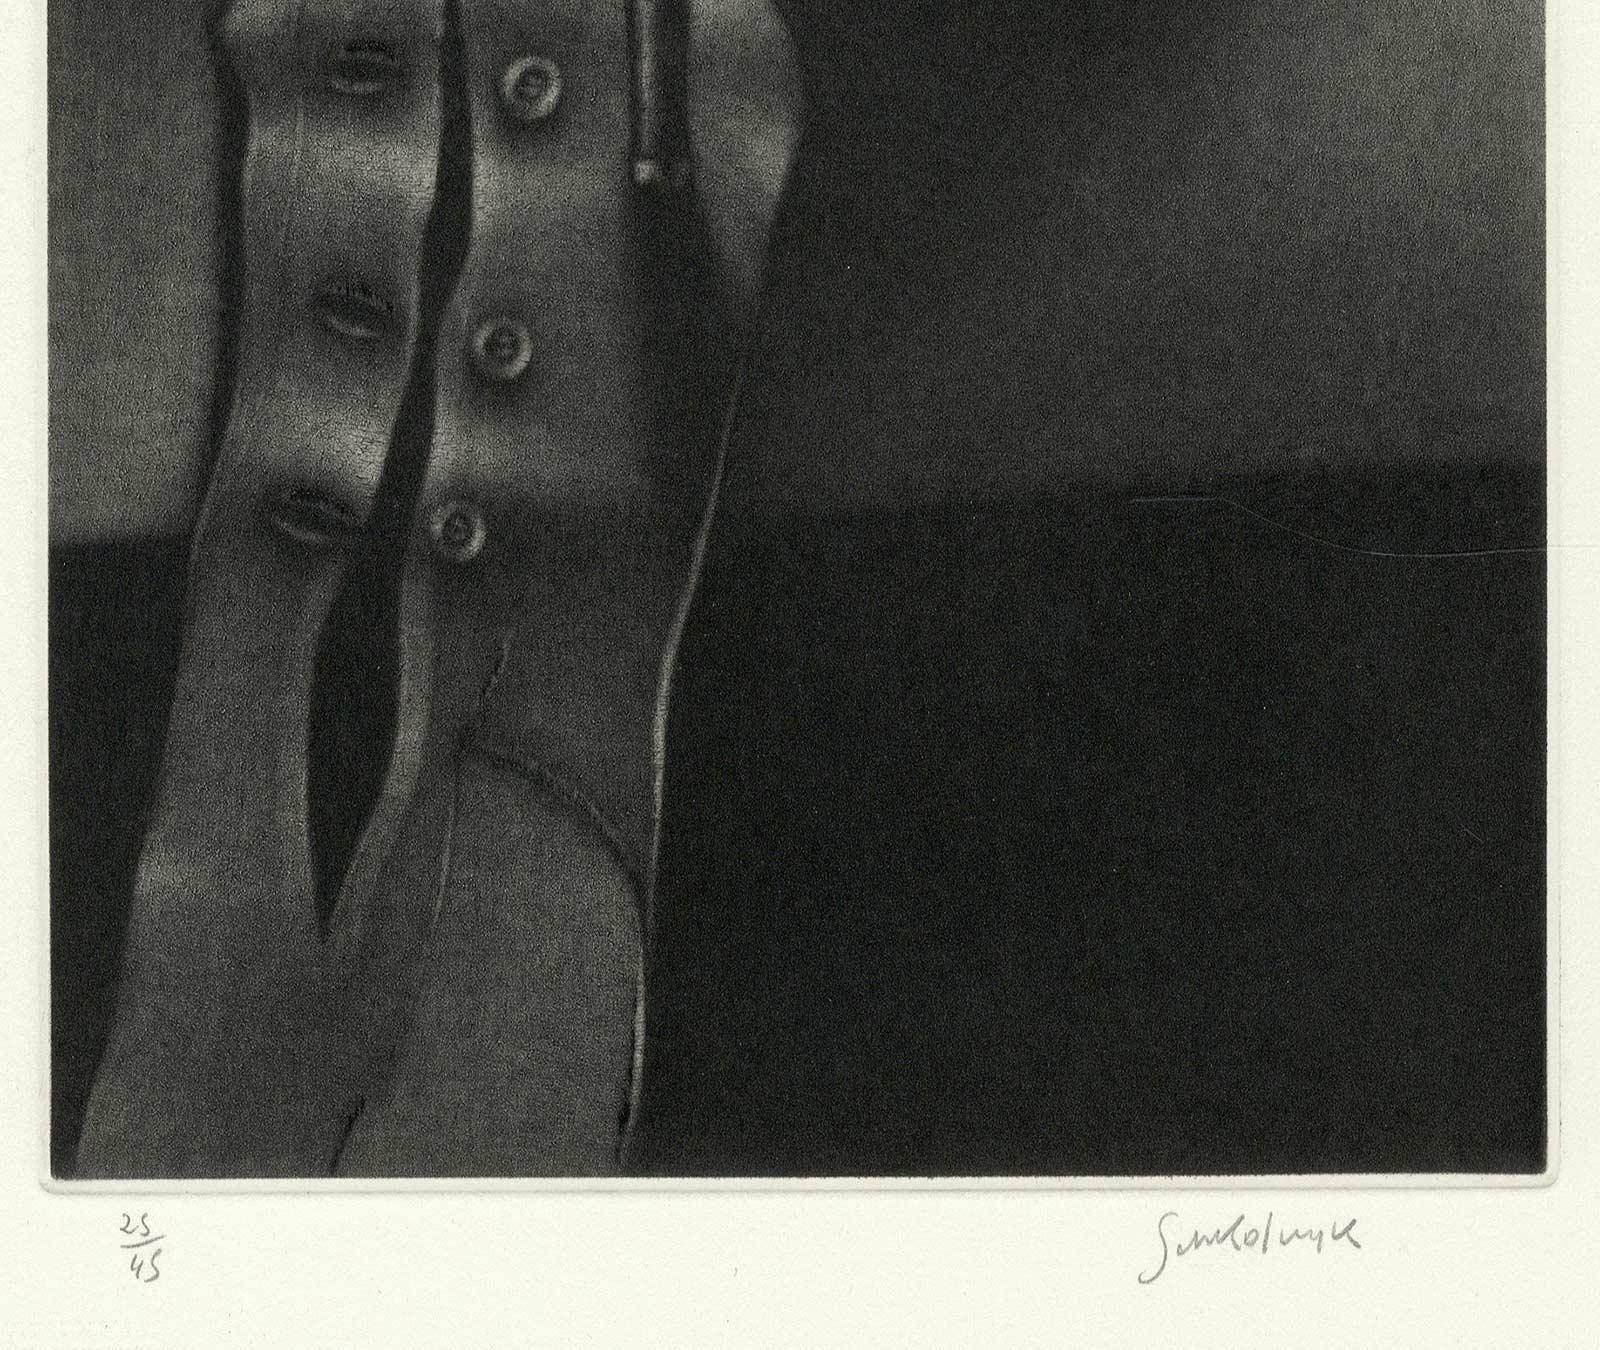 Le Talon Aigviille  (Marlene Dietrich's Stiletto Heel - In time for PRIDE) - Contemporain Print par Laurent Schkolnyk